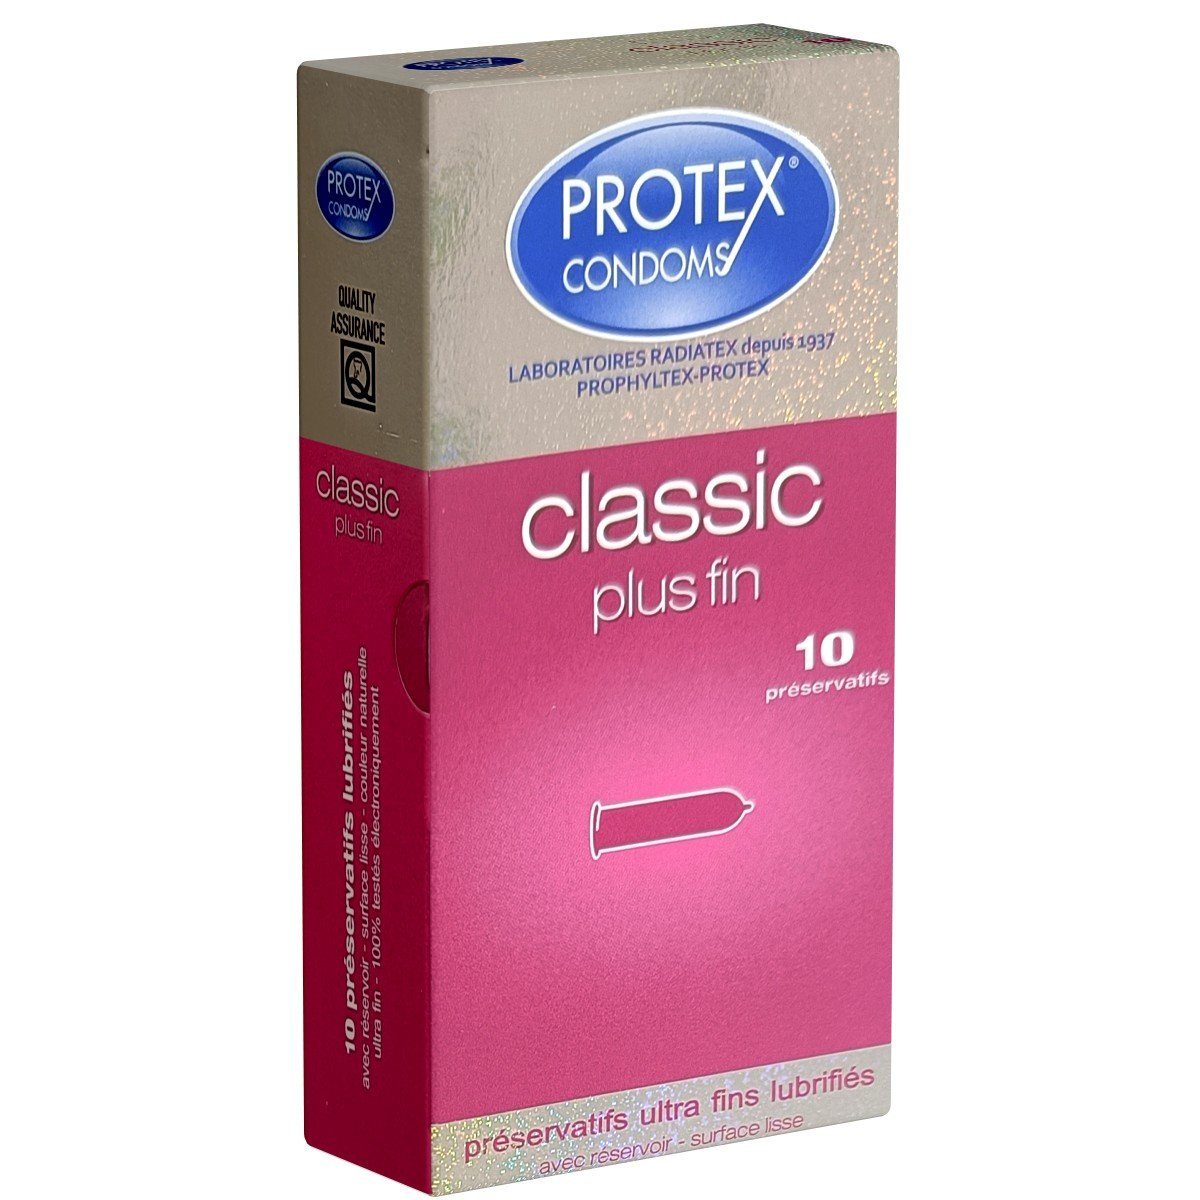 Protex Kondome CLASSIC Plus Fin Packung mit, 10 St., superdünne Kondome aus Frankreich